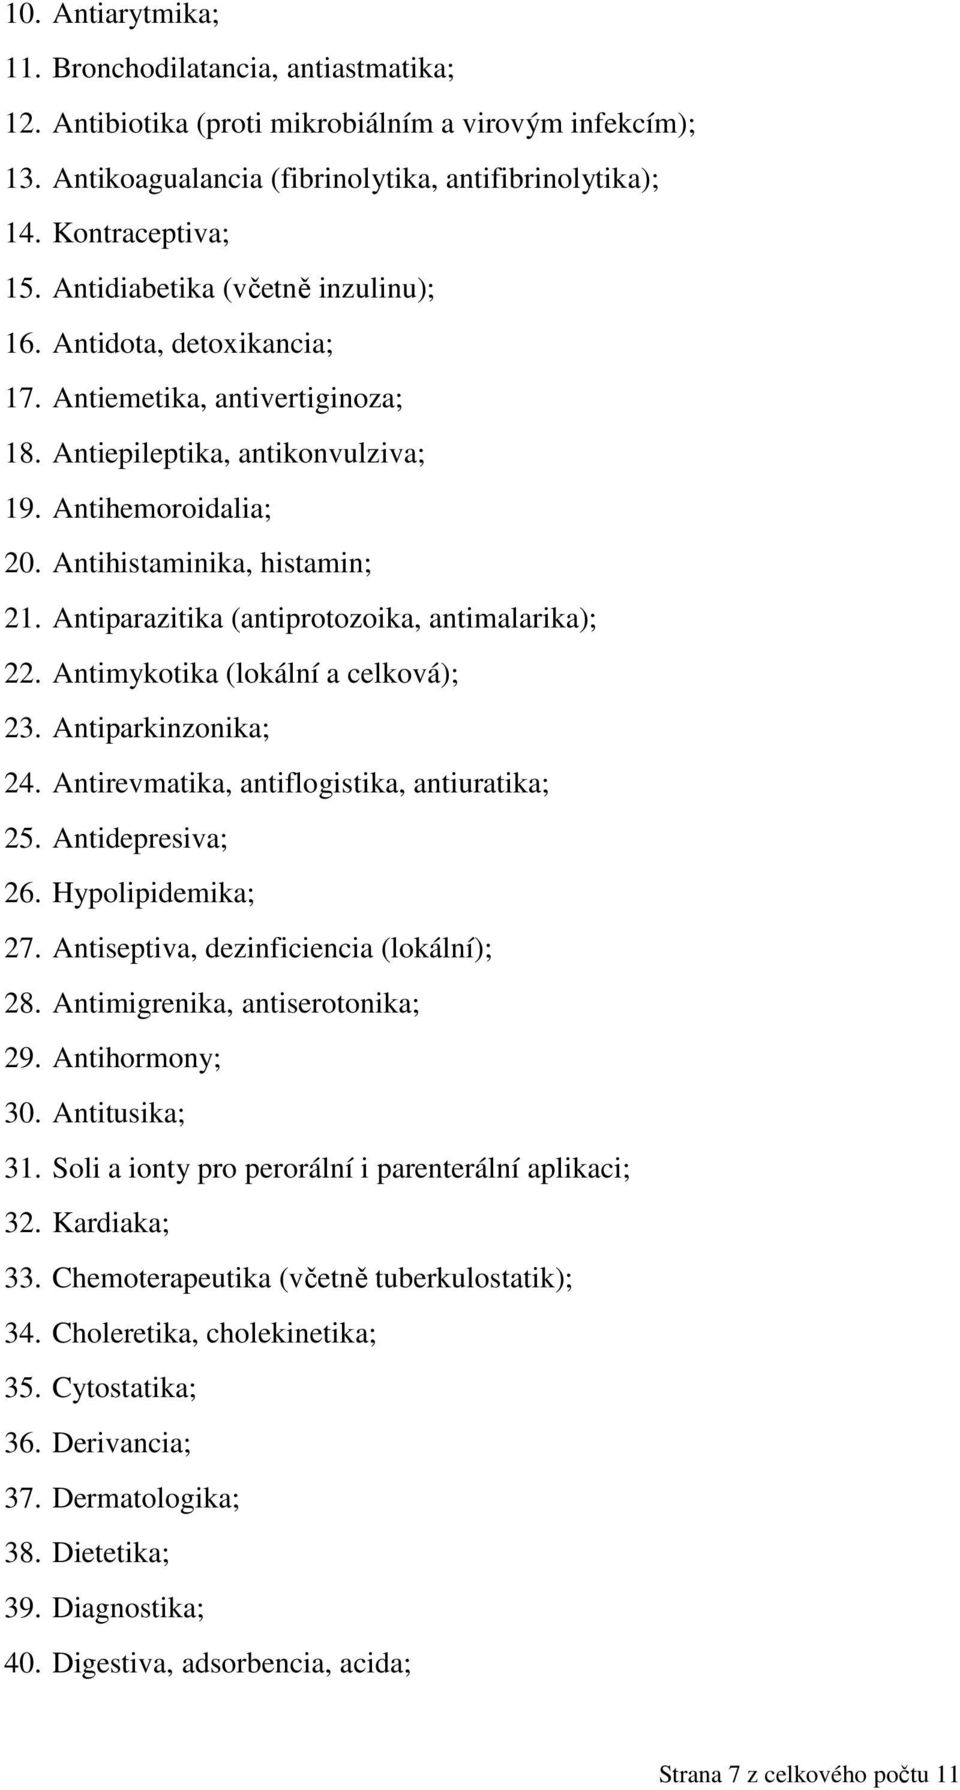 Antiparazitika (antiprotozoika, antimalarika); 22. Antimykotika (lokální a celková); 23. Antiparkinzonika; 24. Antirevmatika, antiflogistika, antiuratika; 25. Antidepresiva; 26. Hypolipidemika; 27.